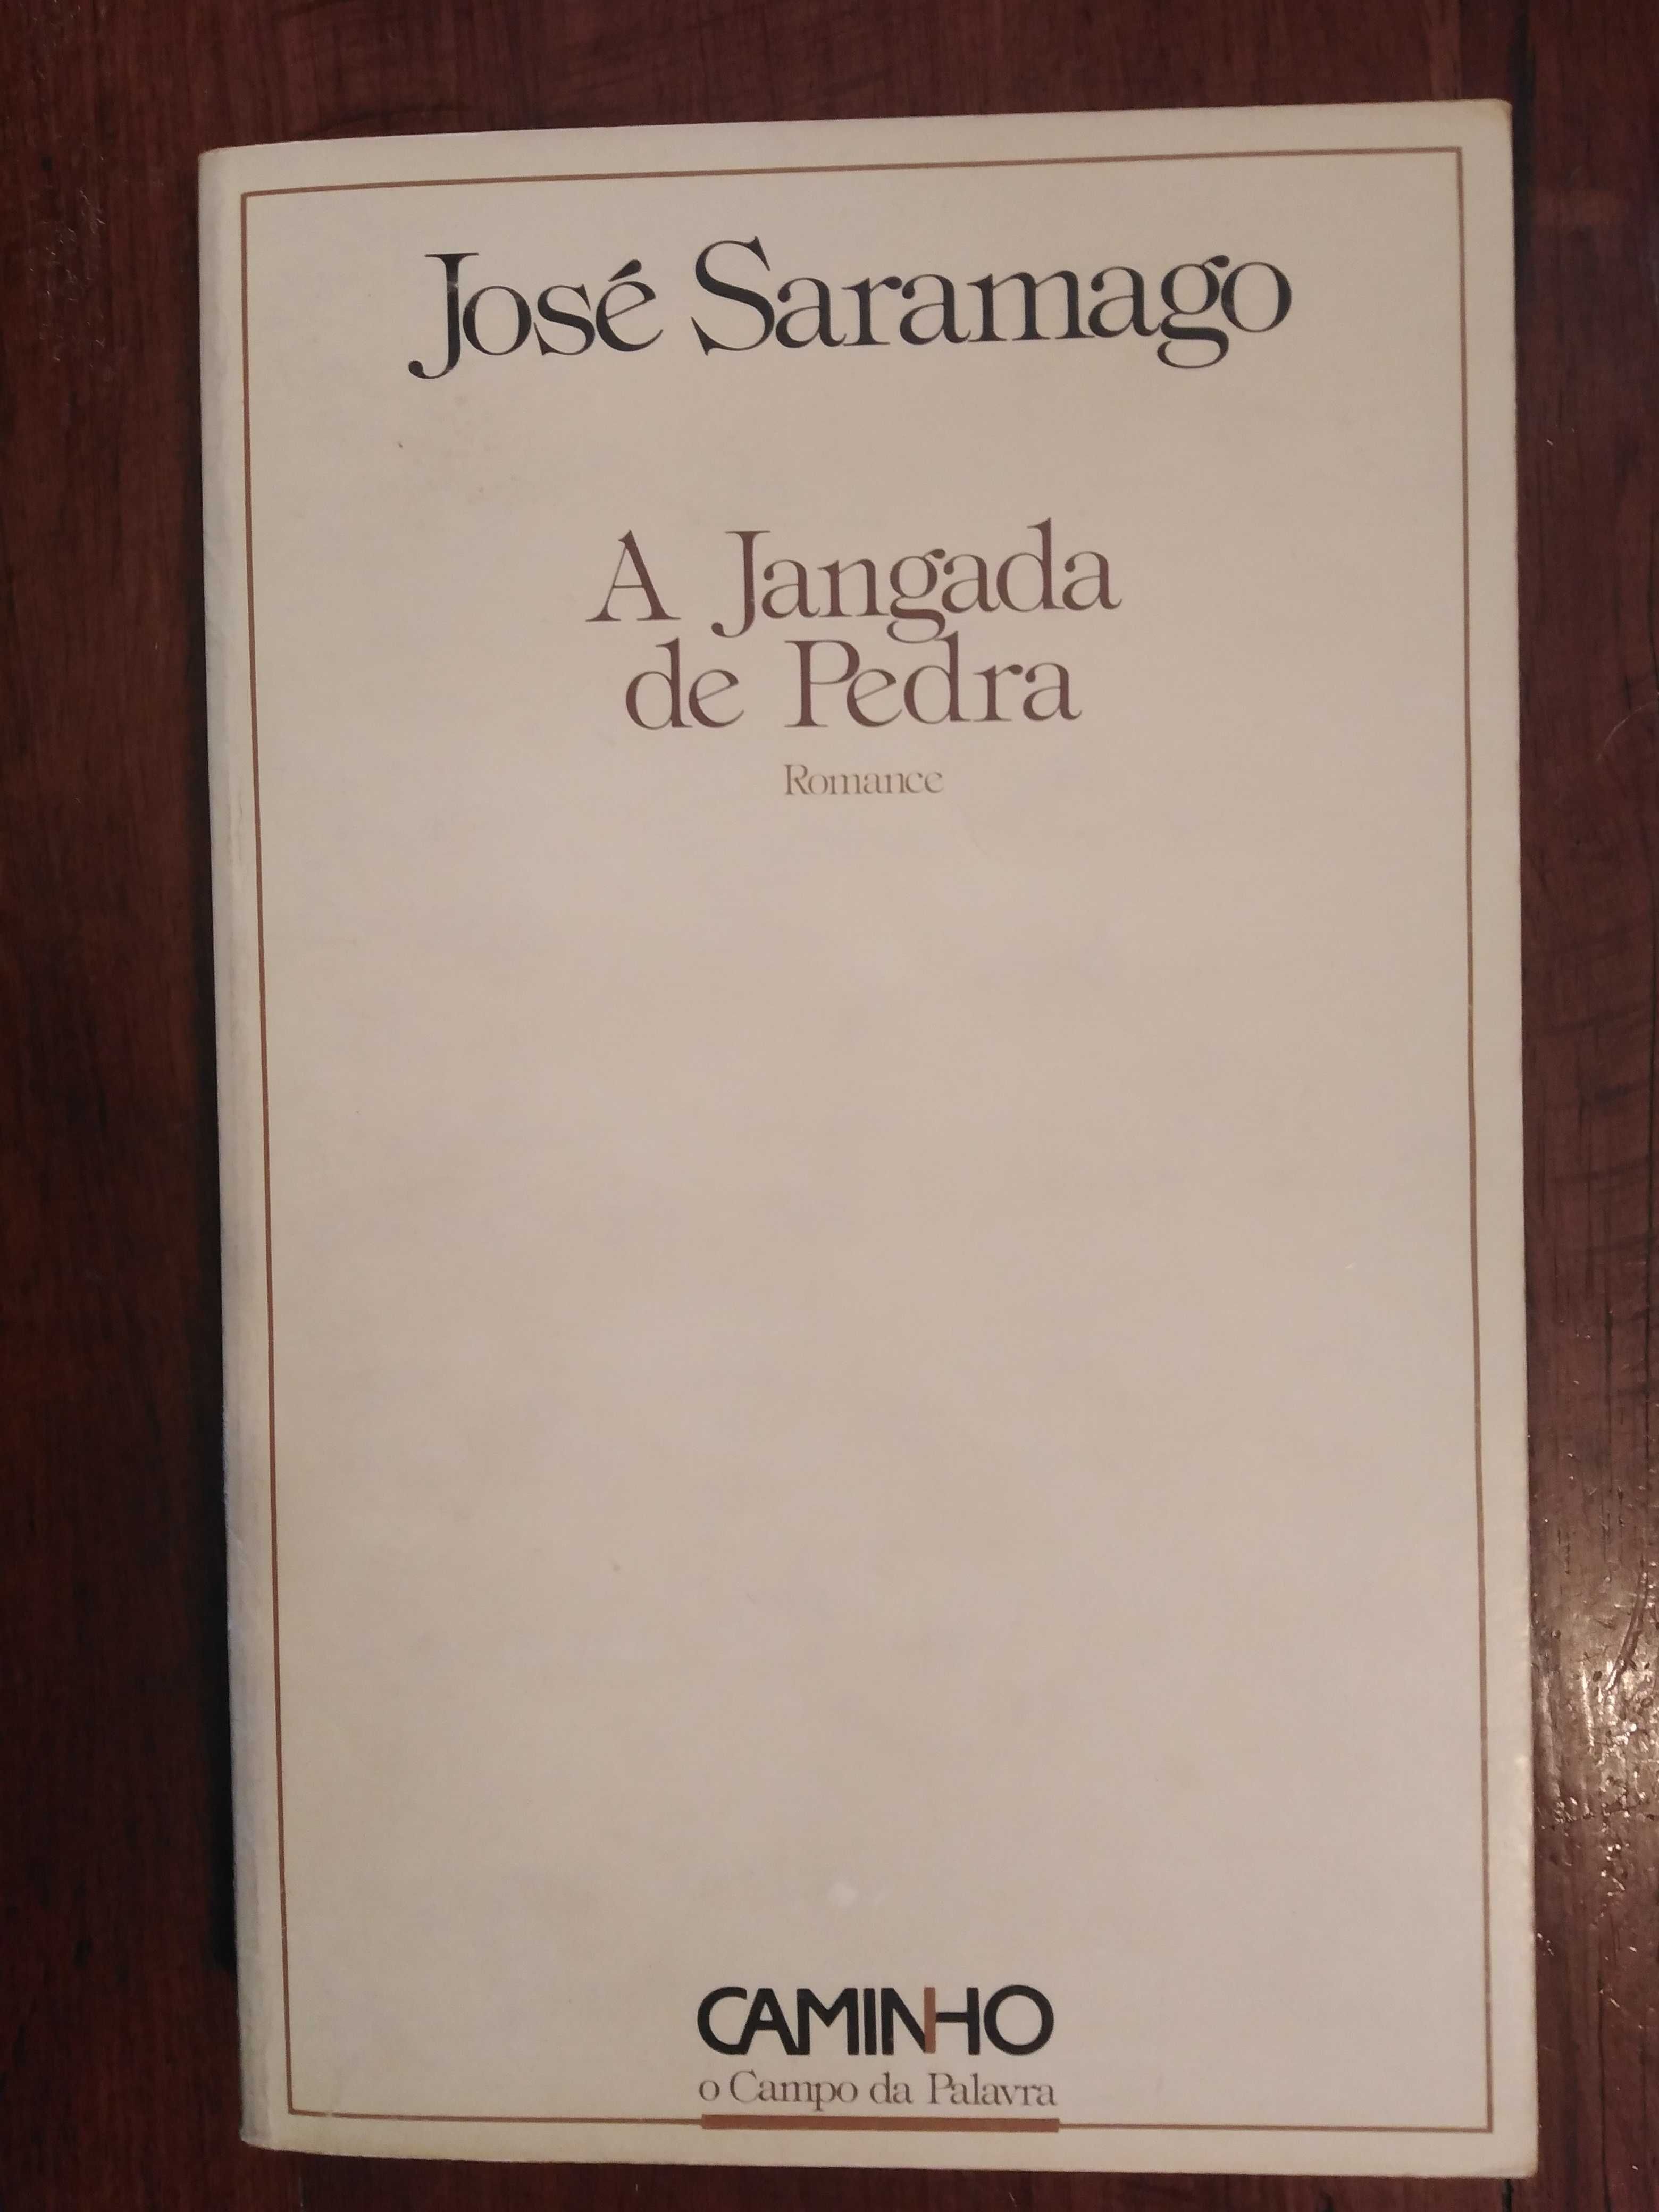 José Saramago - A jangada de pedra [1.ª ed.]